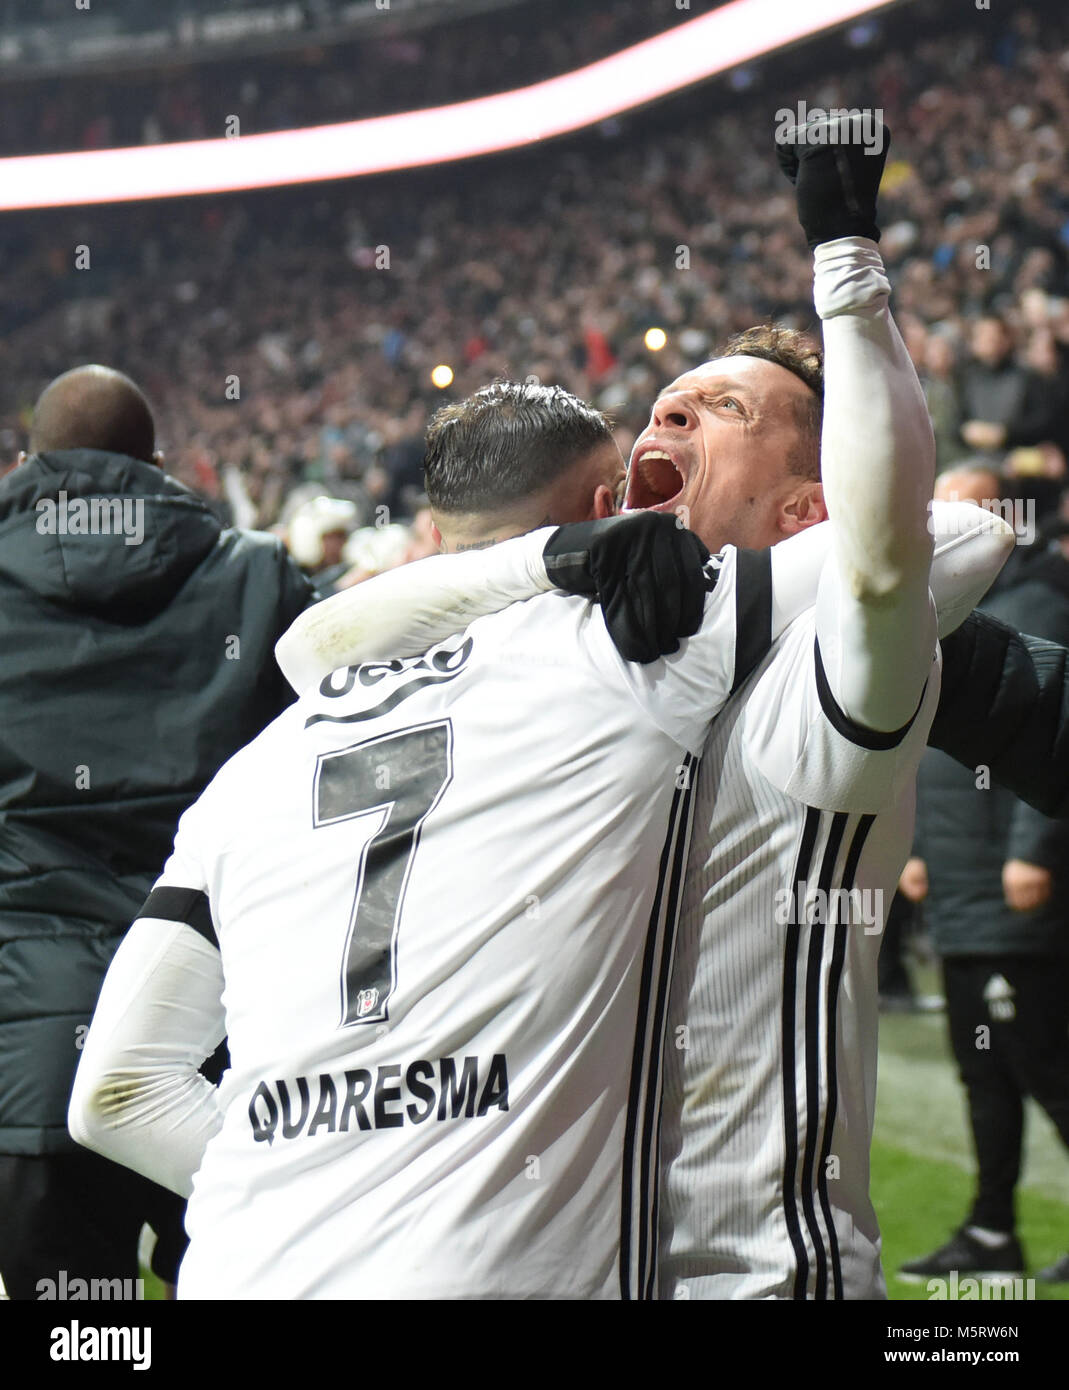 Istanbul, Turkey. 7th Apr, 2018. Dusko Tosic of Besiktas celebrates scoring  during 2017-2018 Turkish Super League match between Besiktas and Goztepe in  Istanbul, Turkey, on April 7, 2018. Besiktas won 5-1. Credit